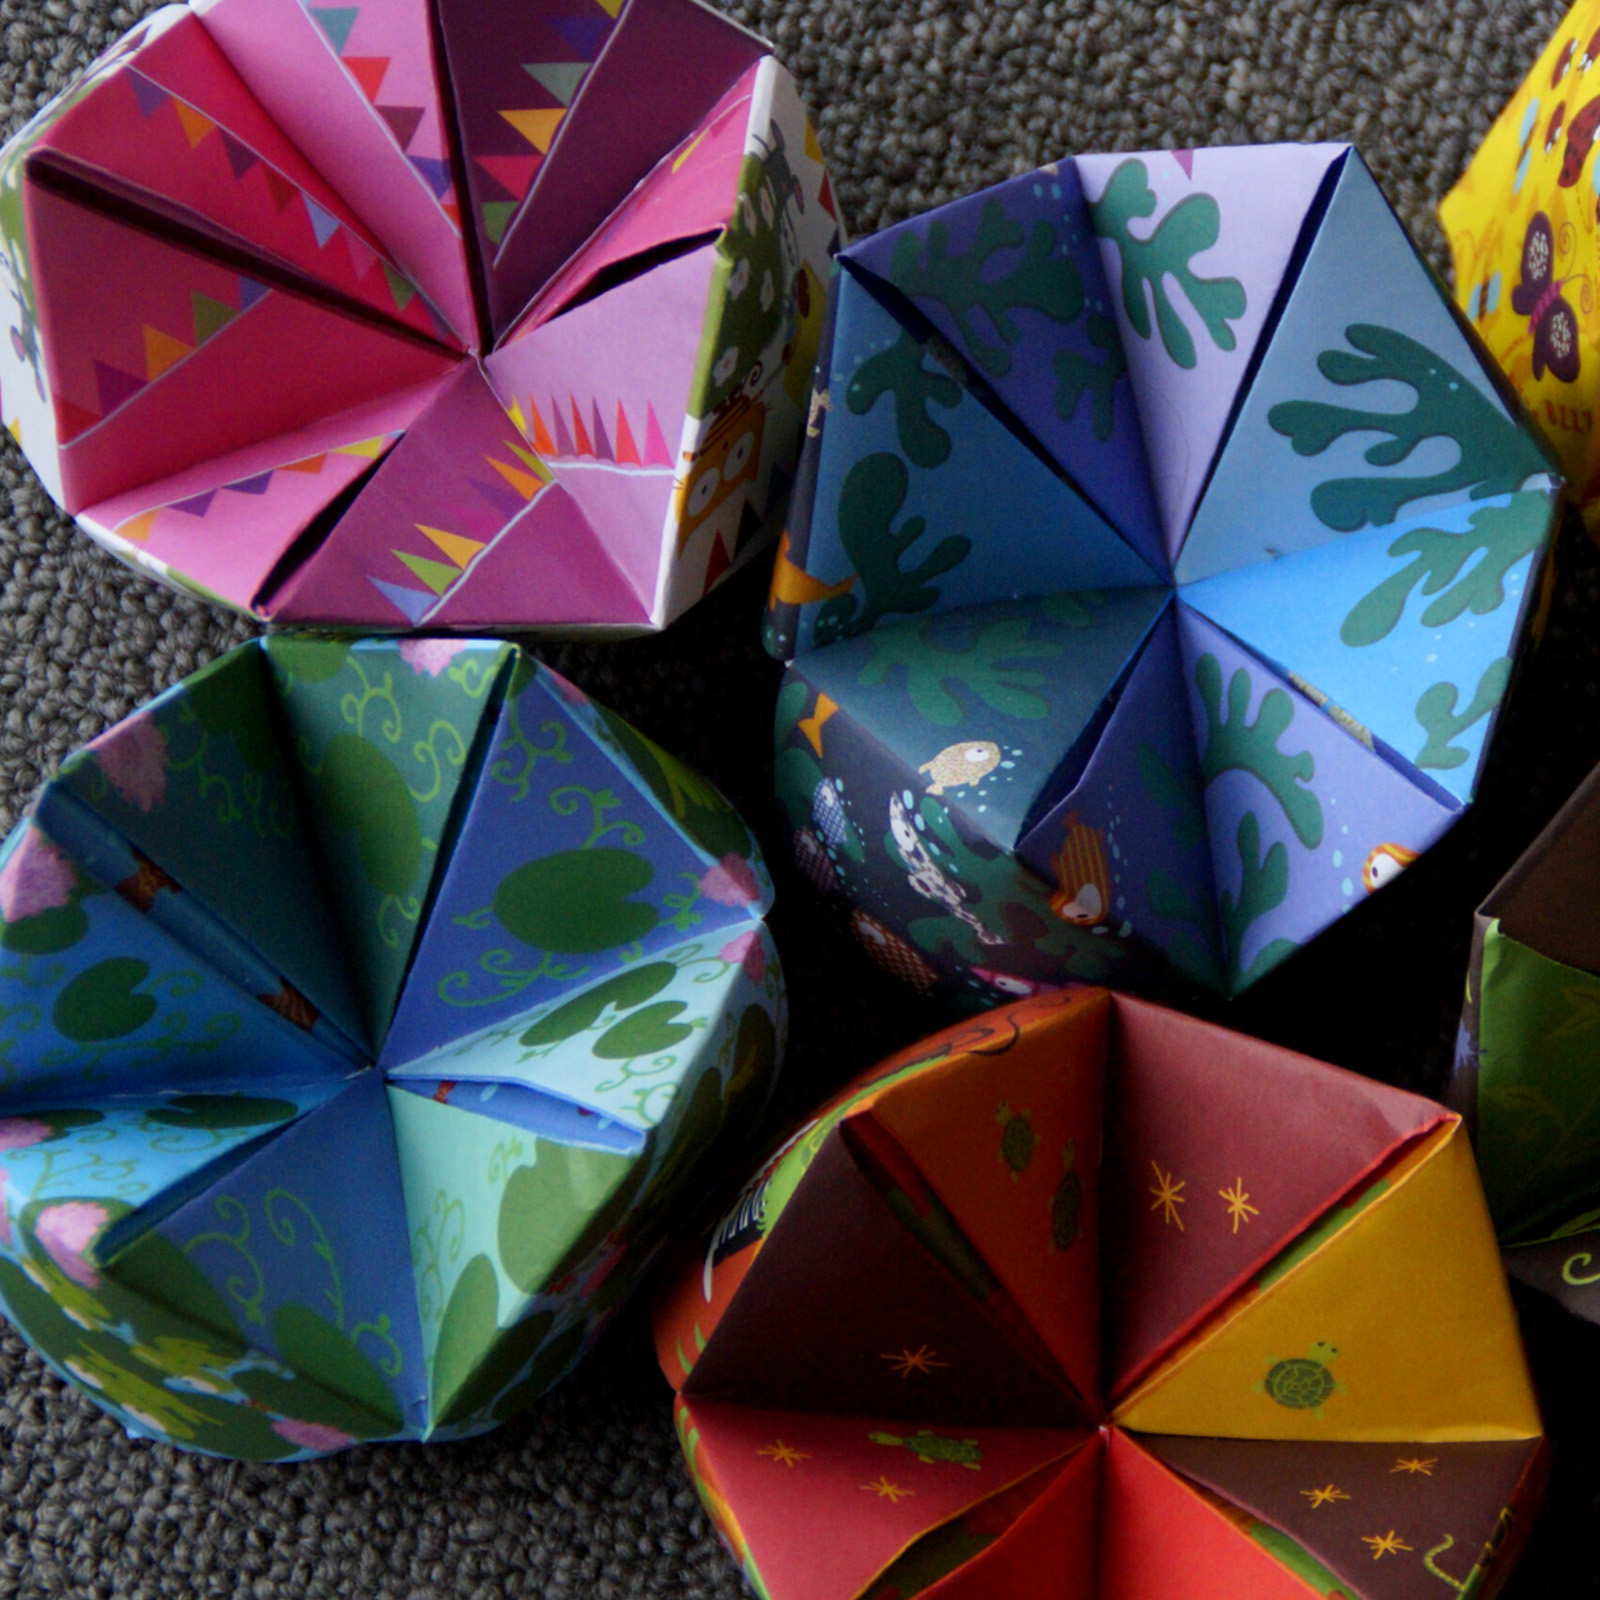 "Origami Origins" by Cynthia Renée.